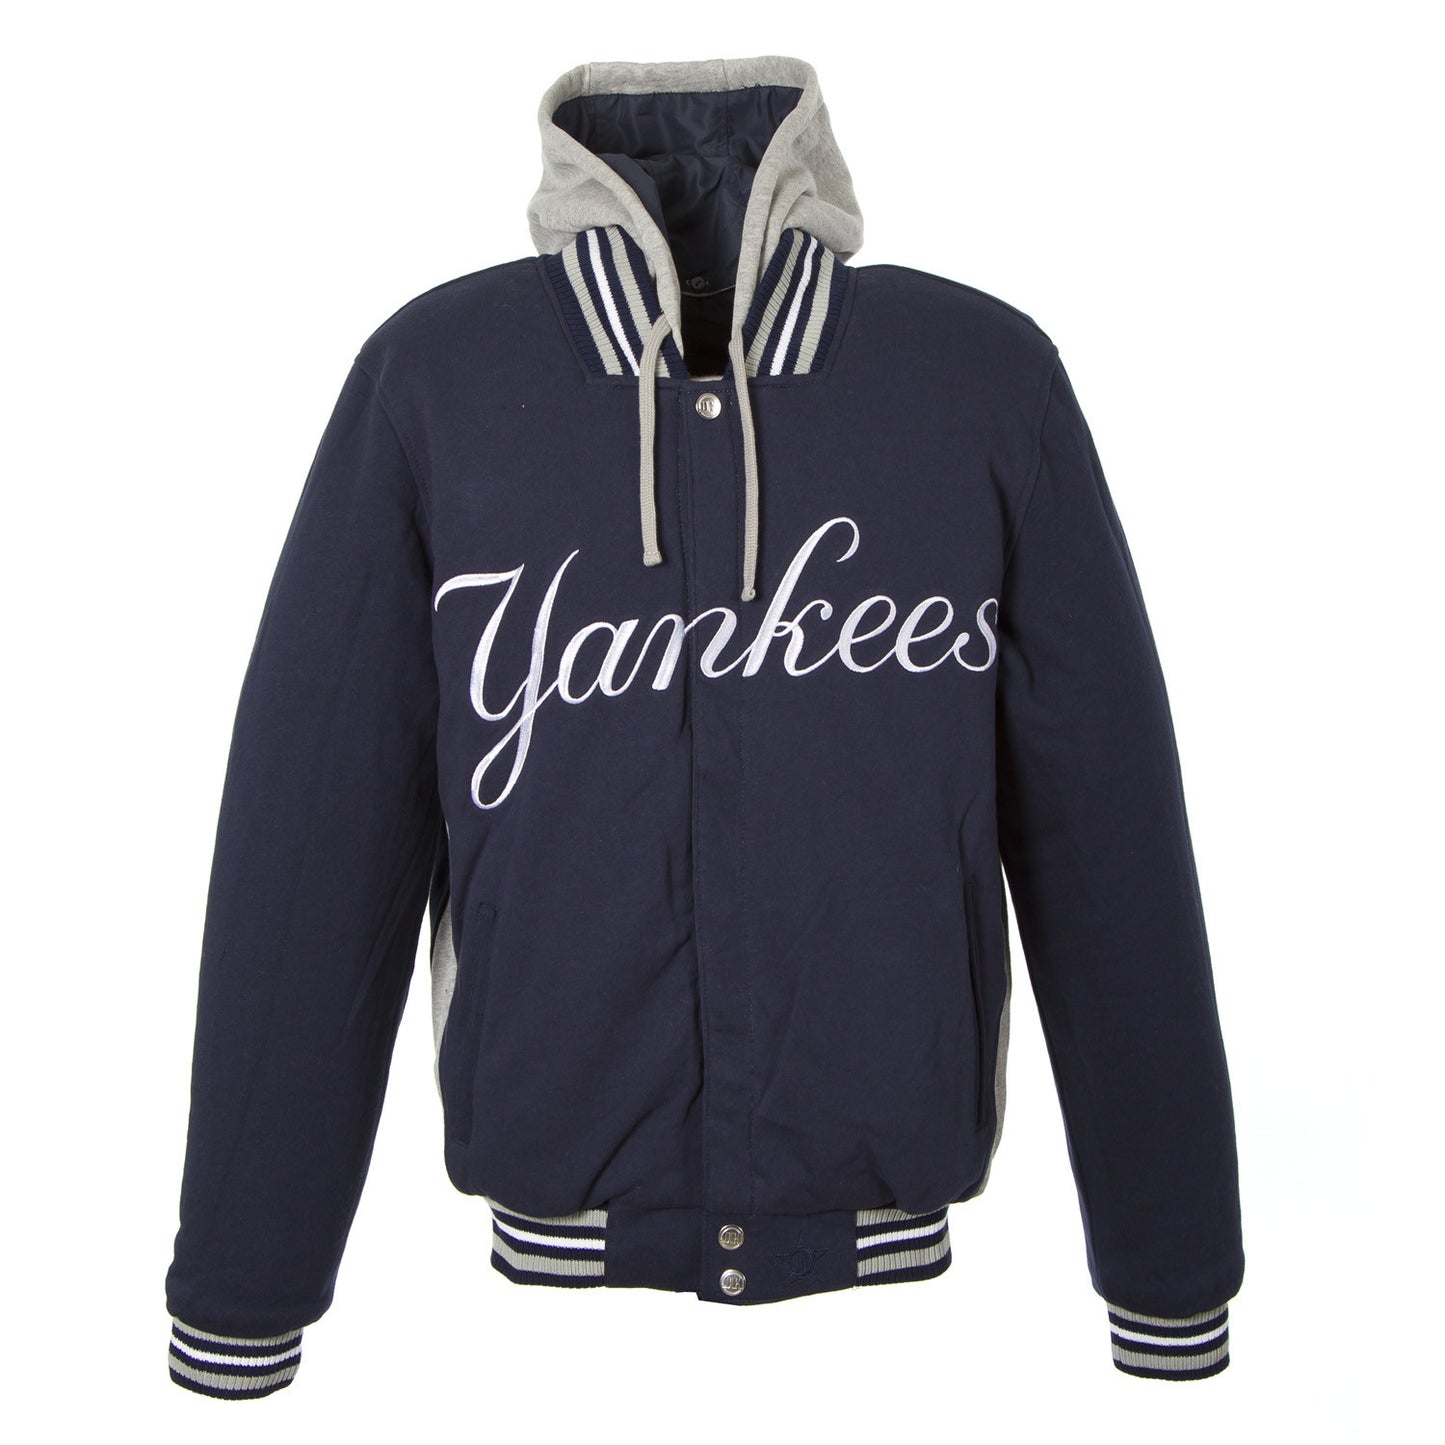 New York Yankees Reversible Fleece Jacket